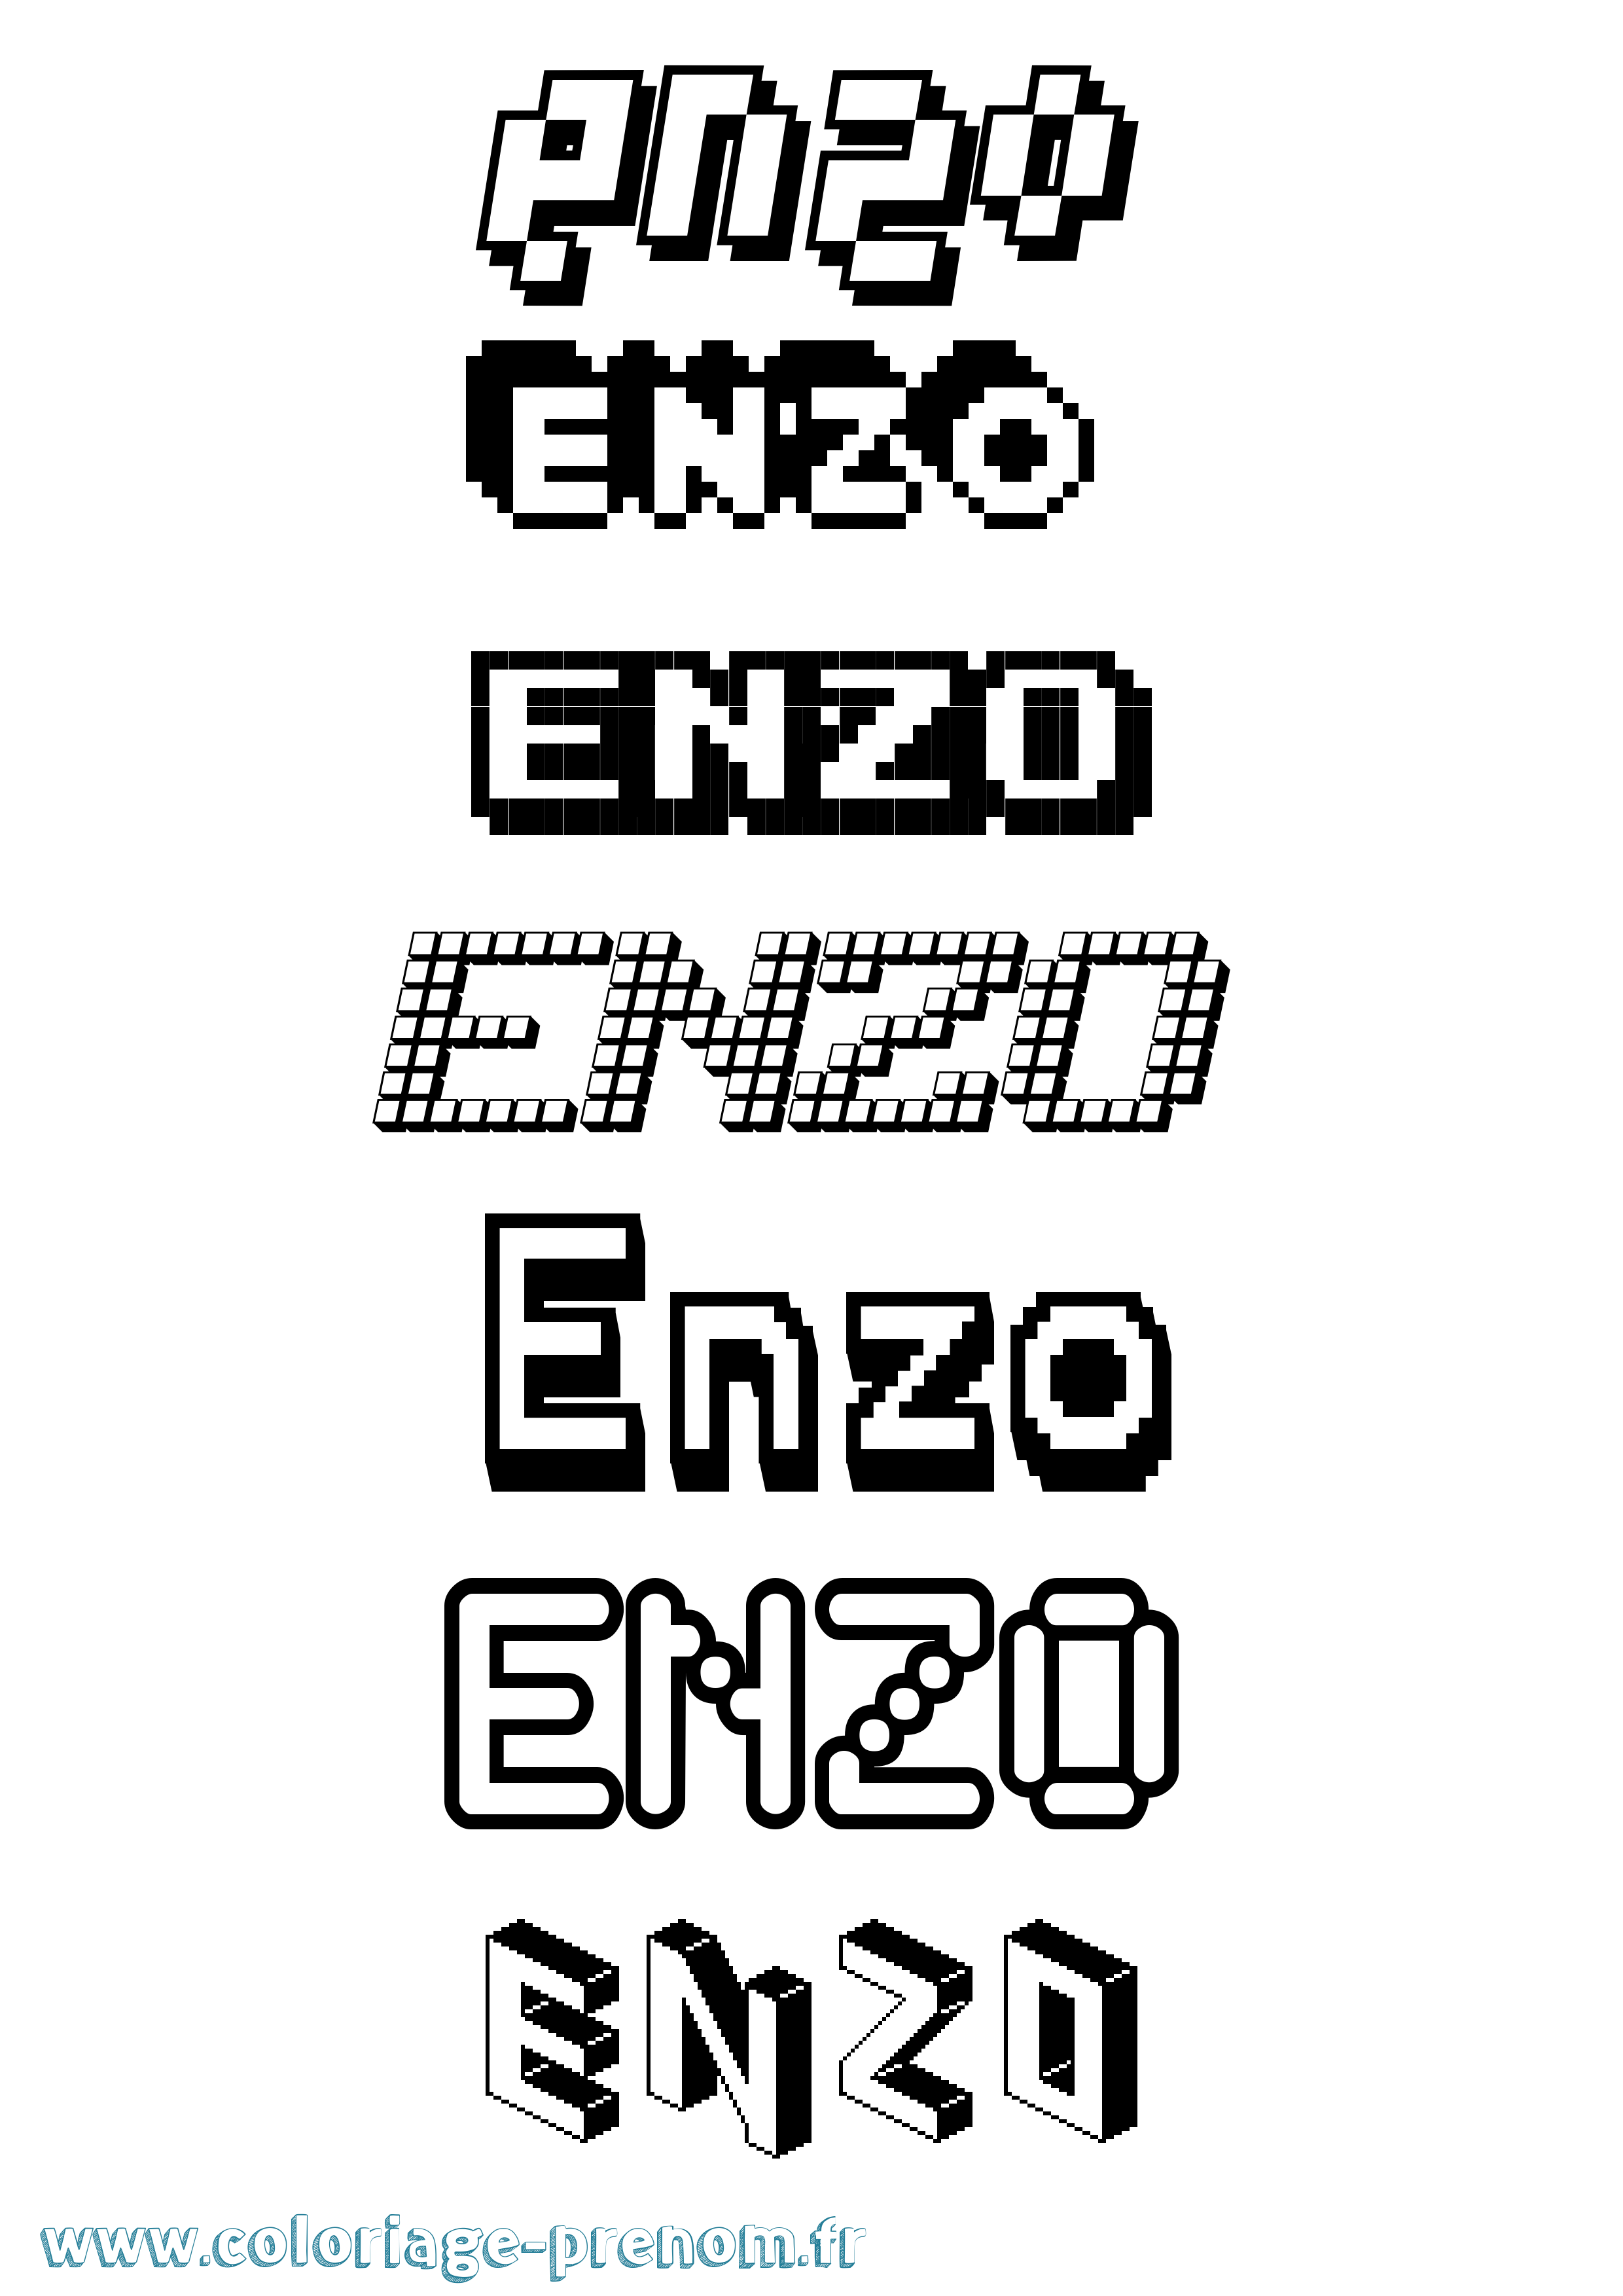 Coloriage prénom Enzo